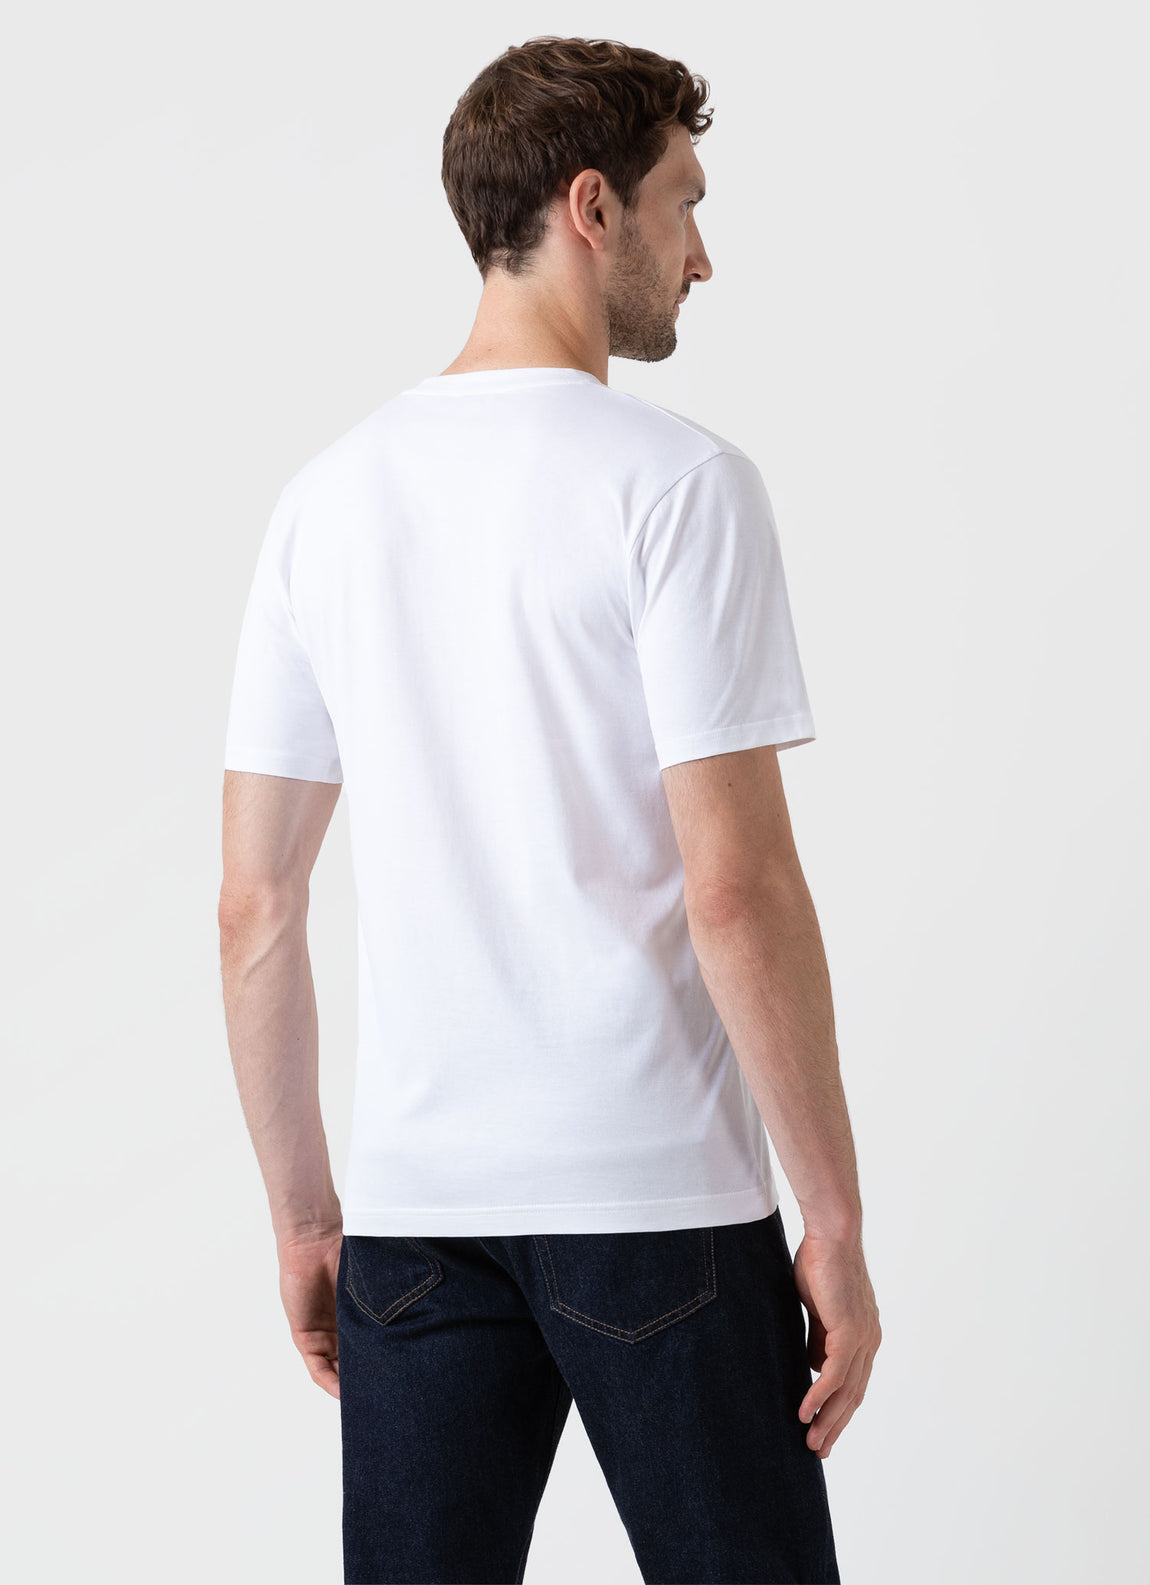 Men's Riviera Midweight V Neck T-shirt in White | Sunspel